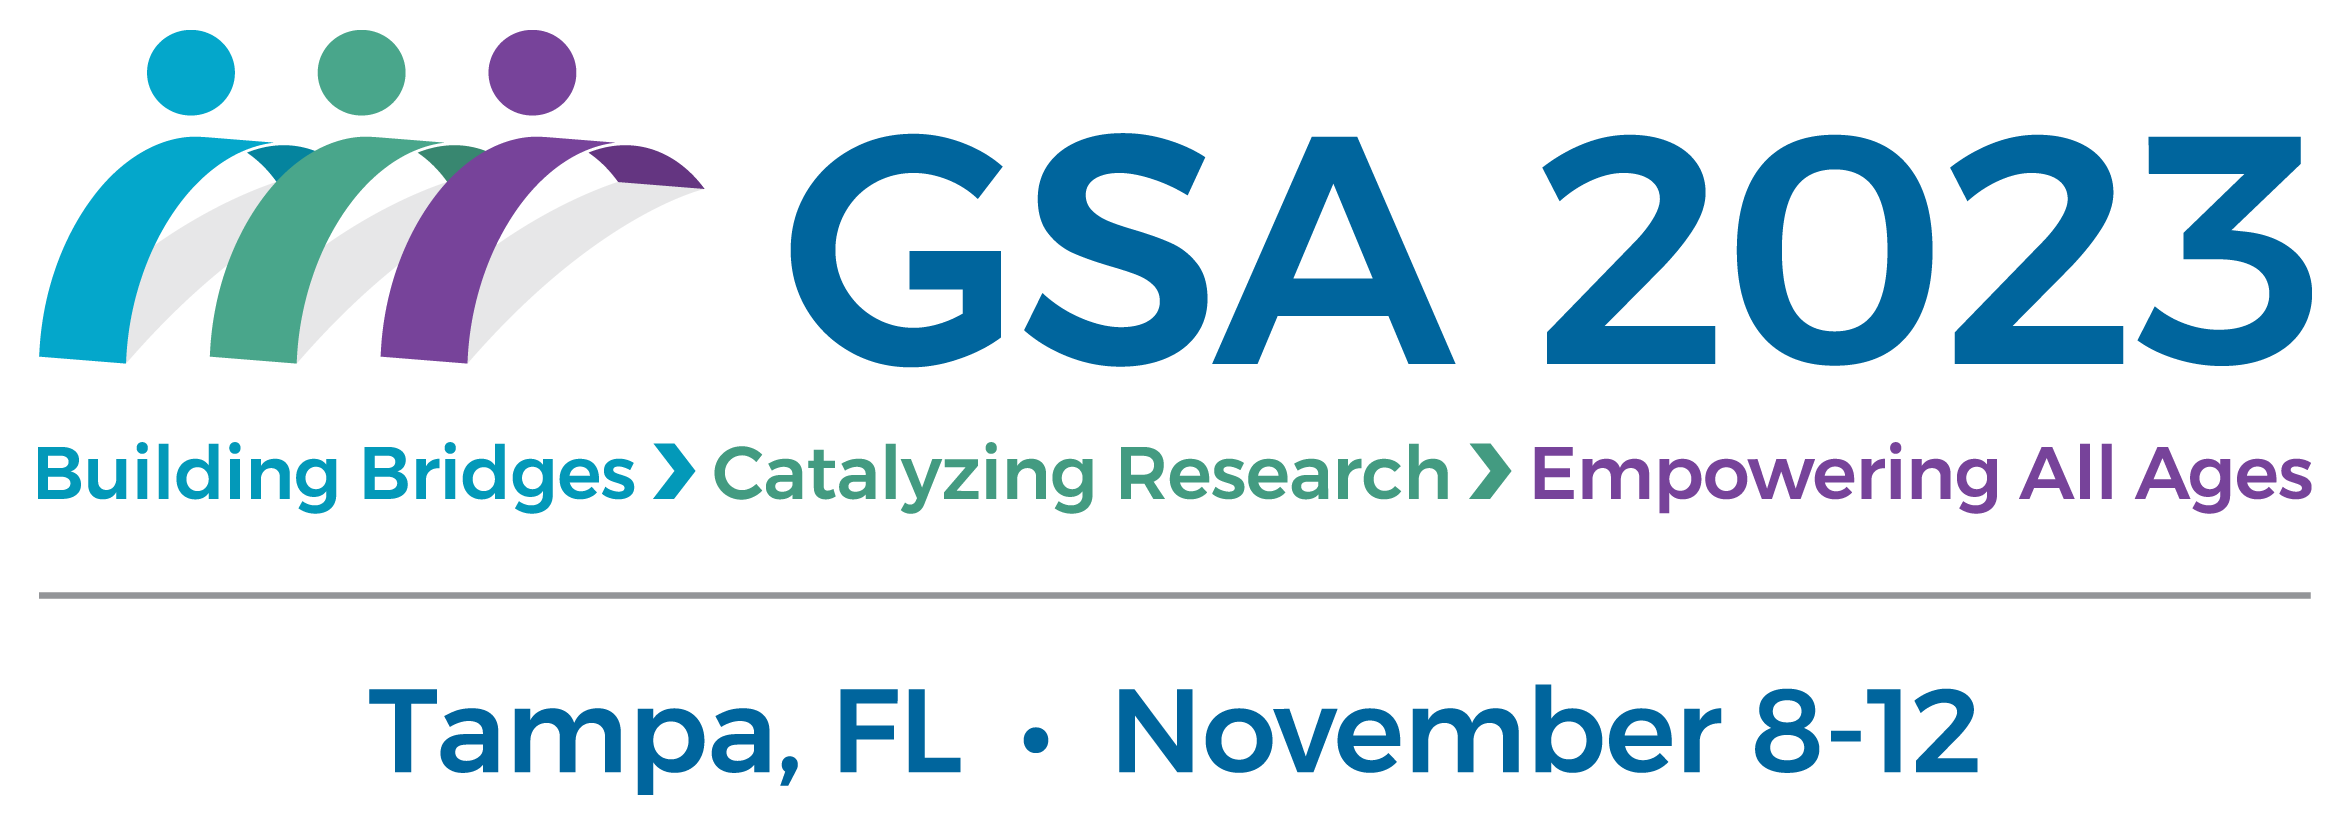 Gerontological Society of America (GSA) Annual Meeting 2023 TechSAge RERC